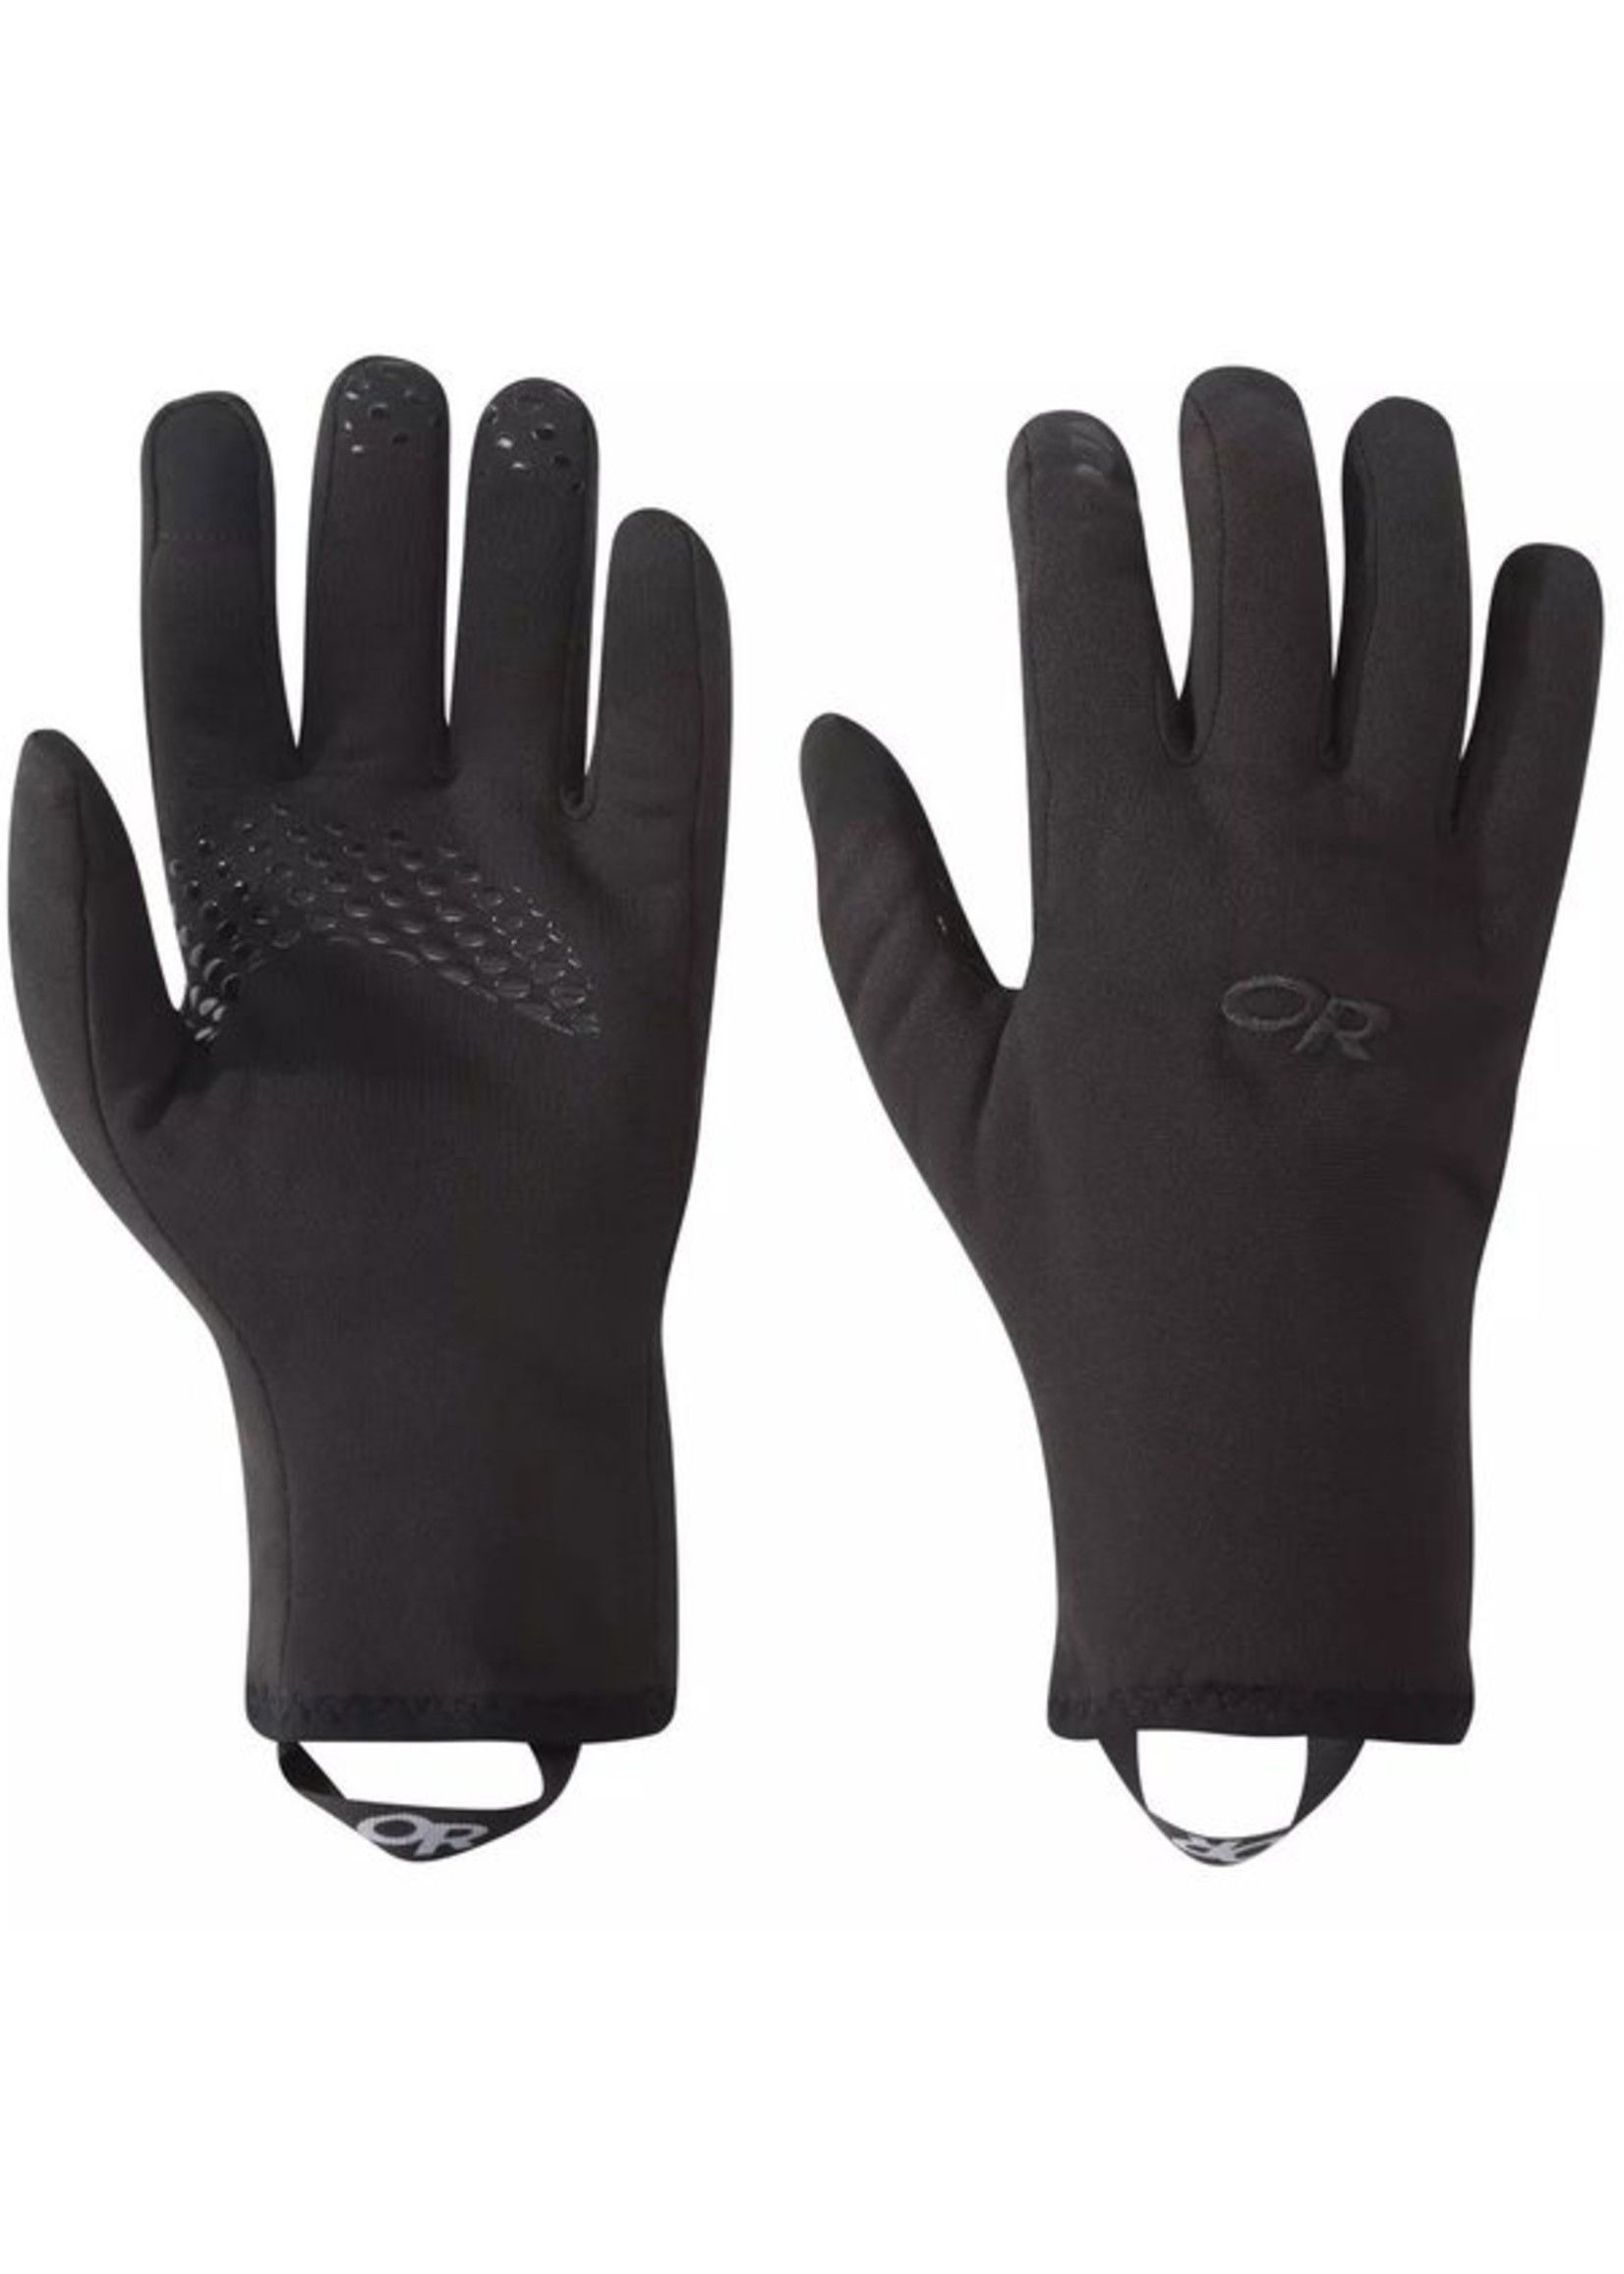 OUTDOOR RESEARCH Men's Waterproof gloves for winter